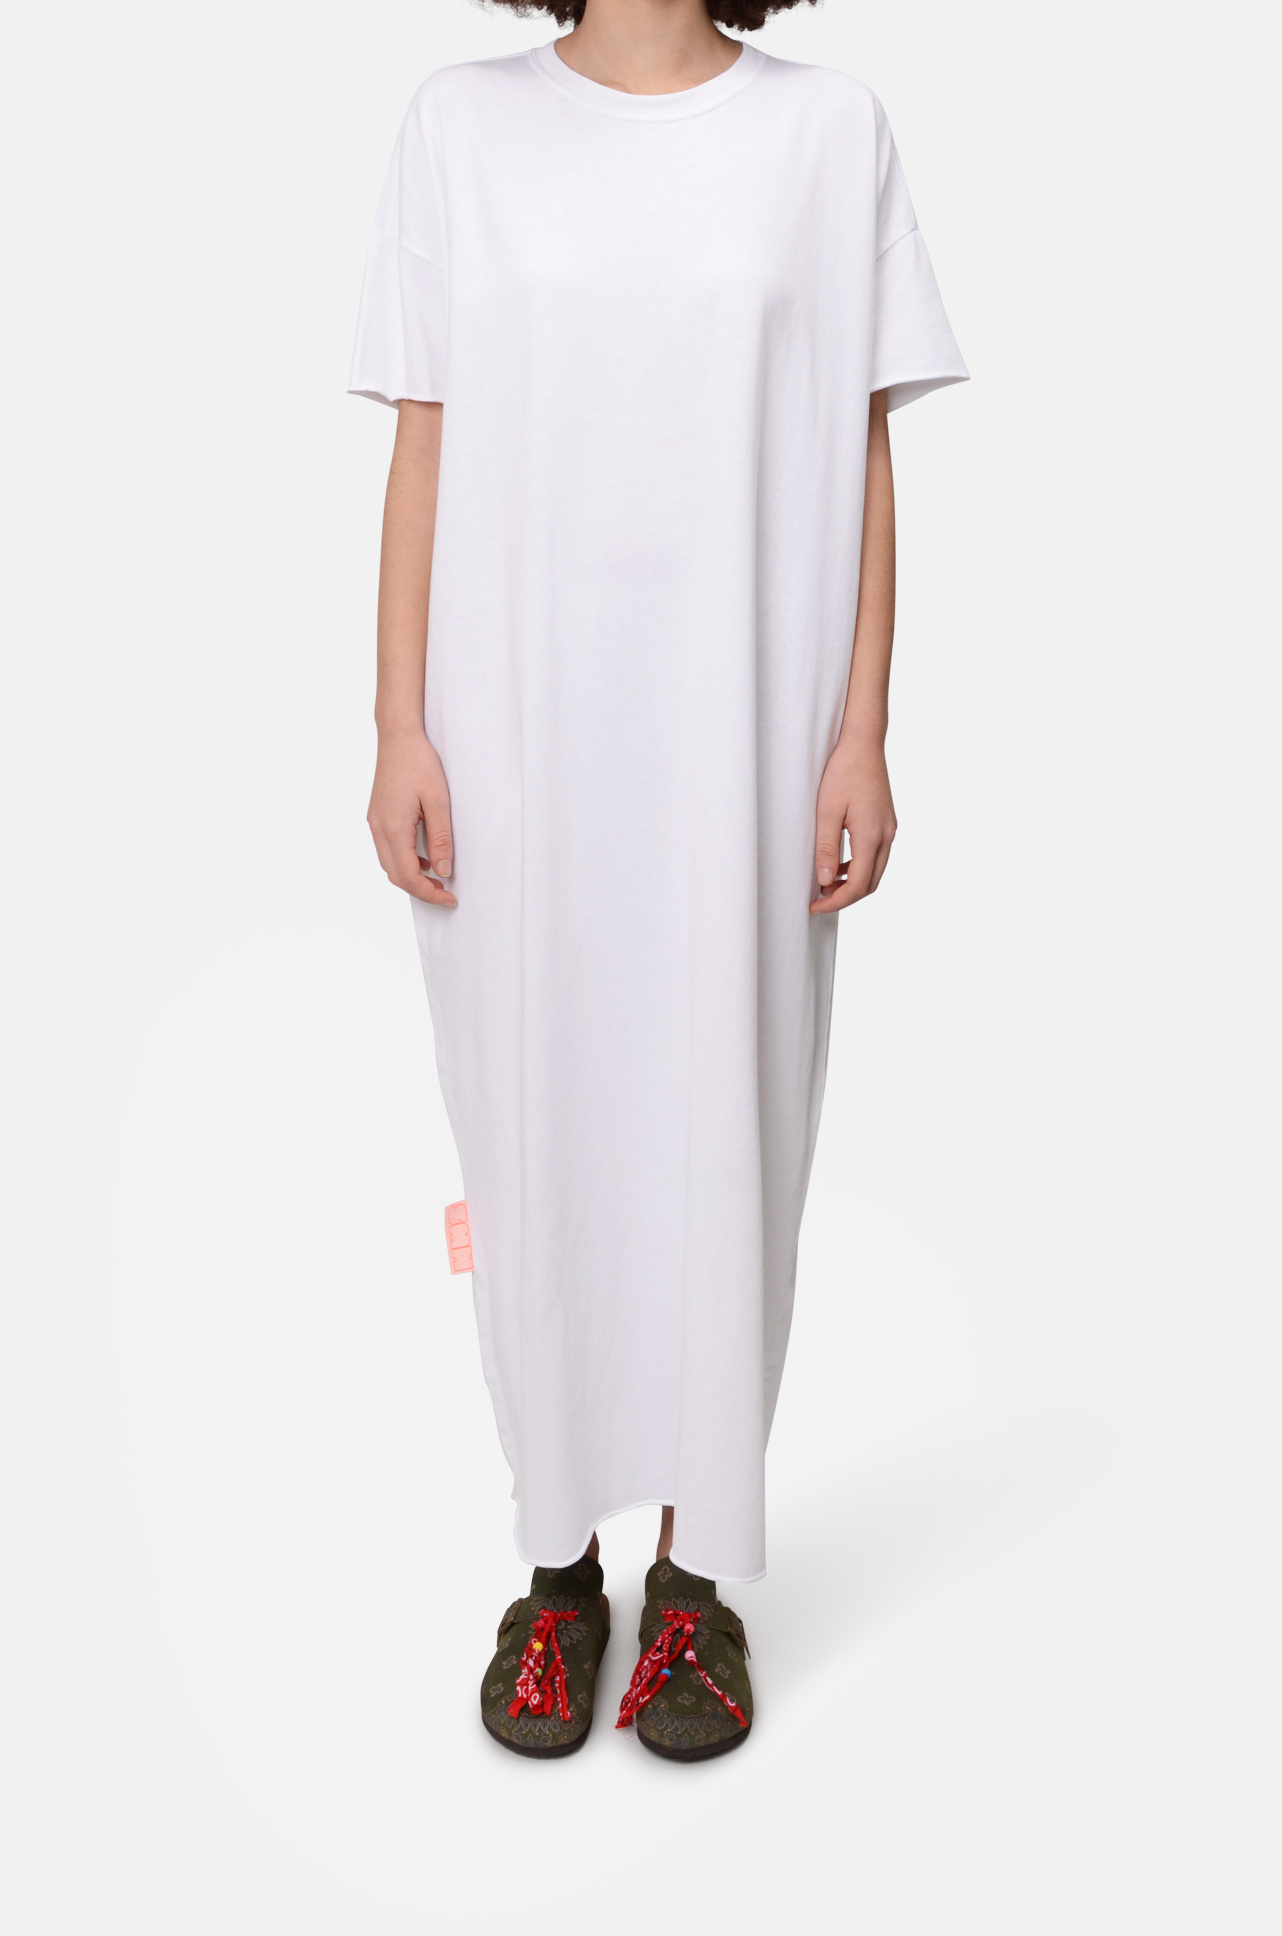 Gigi Dress in white-1